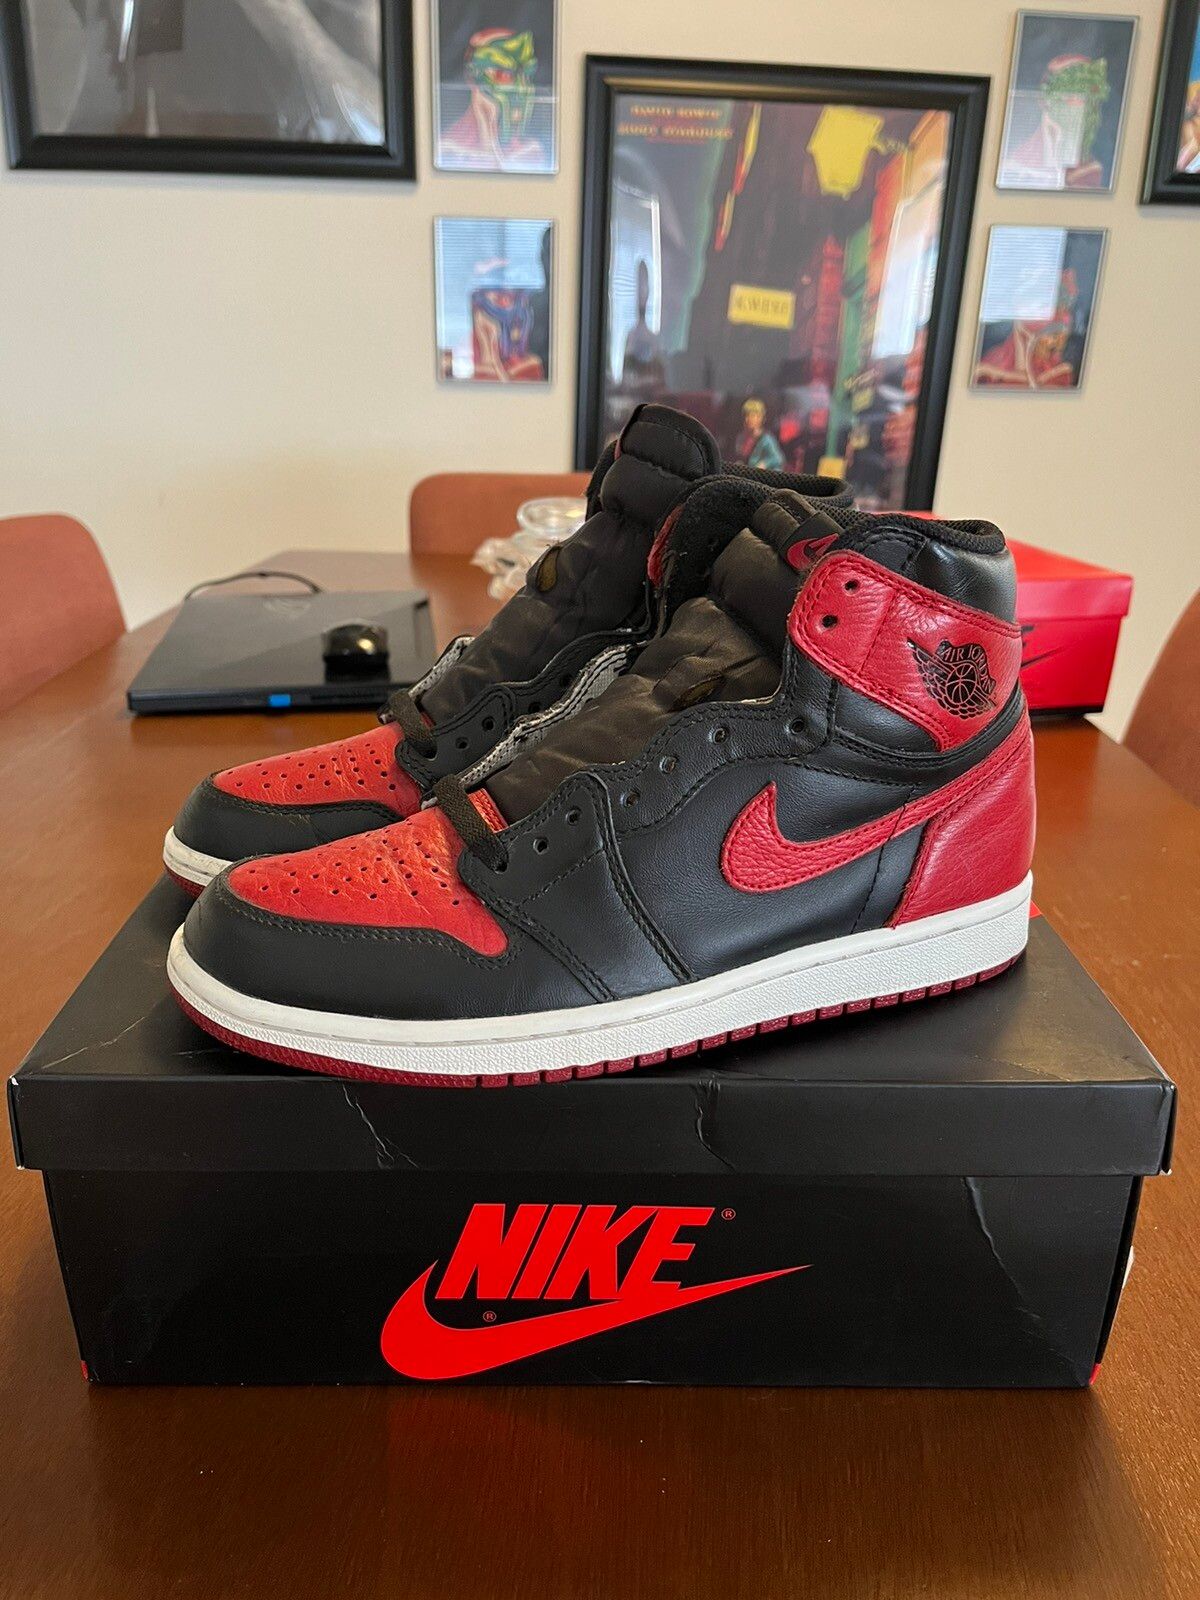 Pre-owned Jordan Nike Jordan 1 Bred 2016 Size 8 Shoes In Red